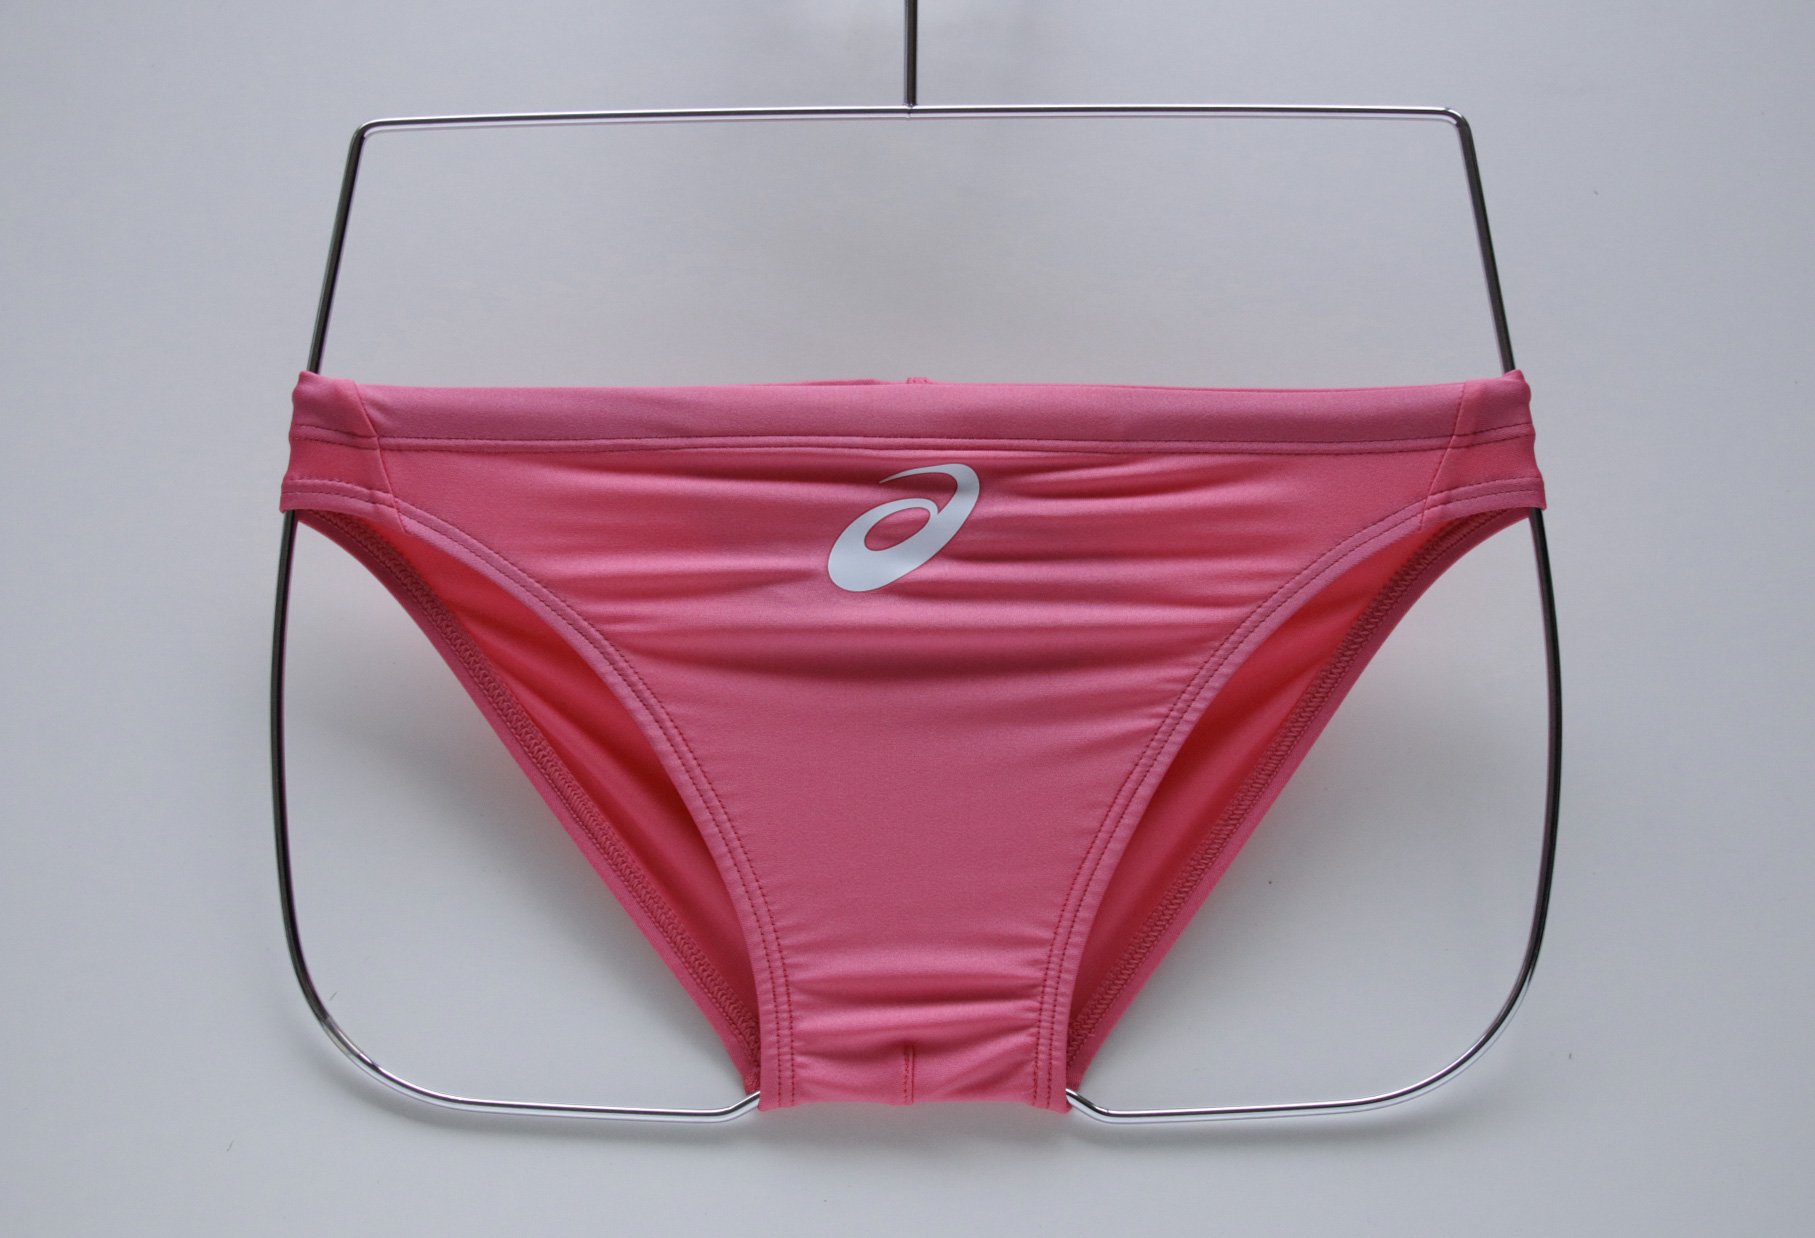 Bespoke asics Men's Competition Swimwear Successor to HYDRO-CD Brief Pink